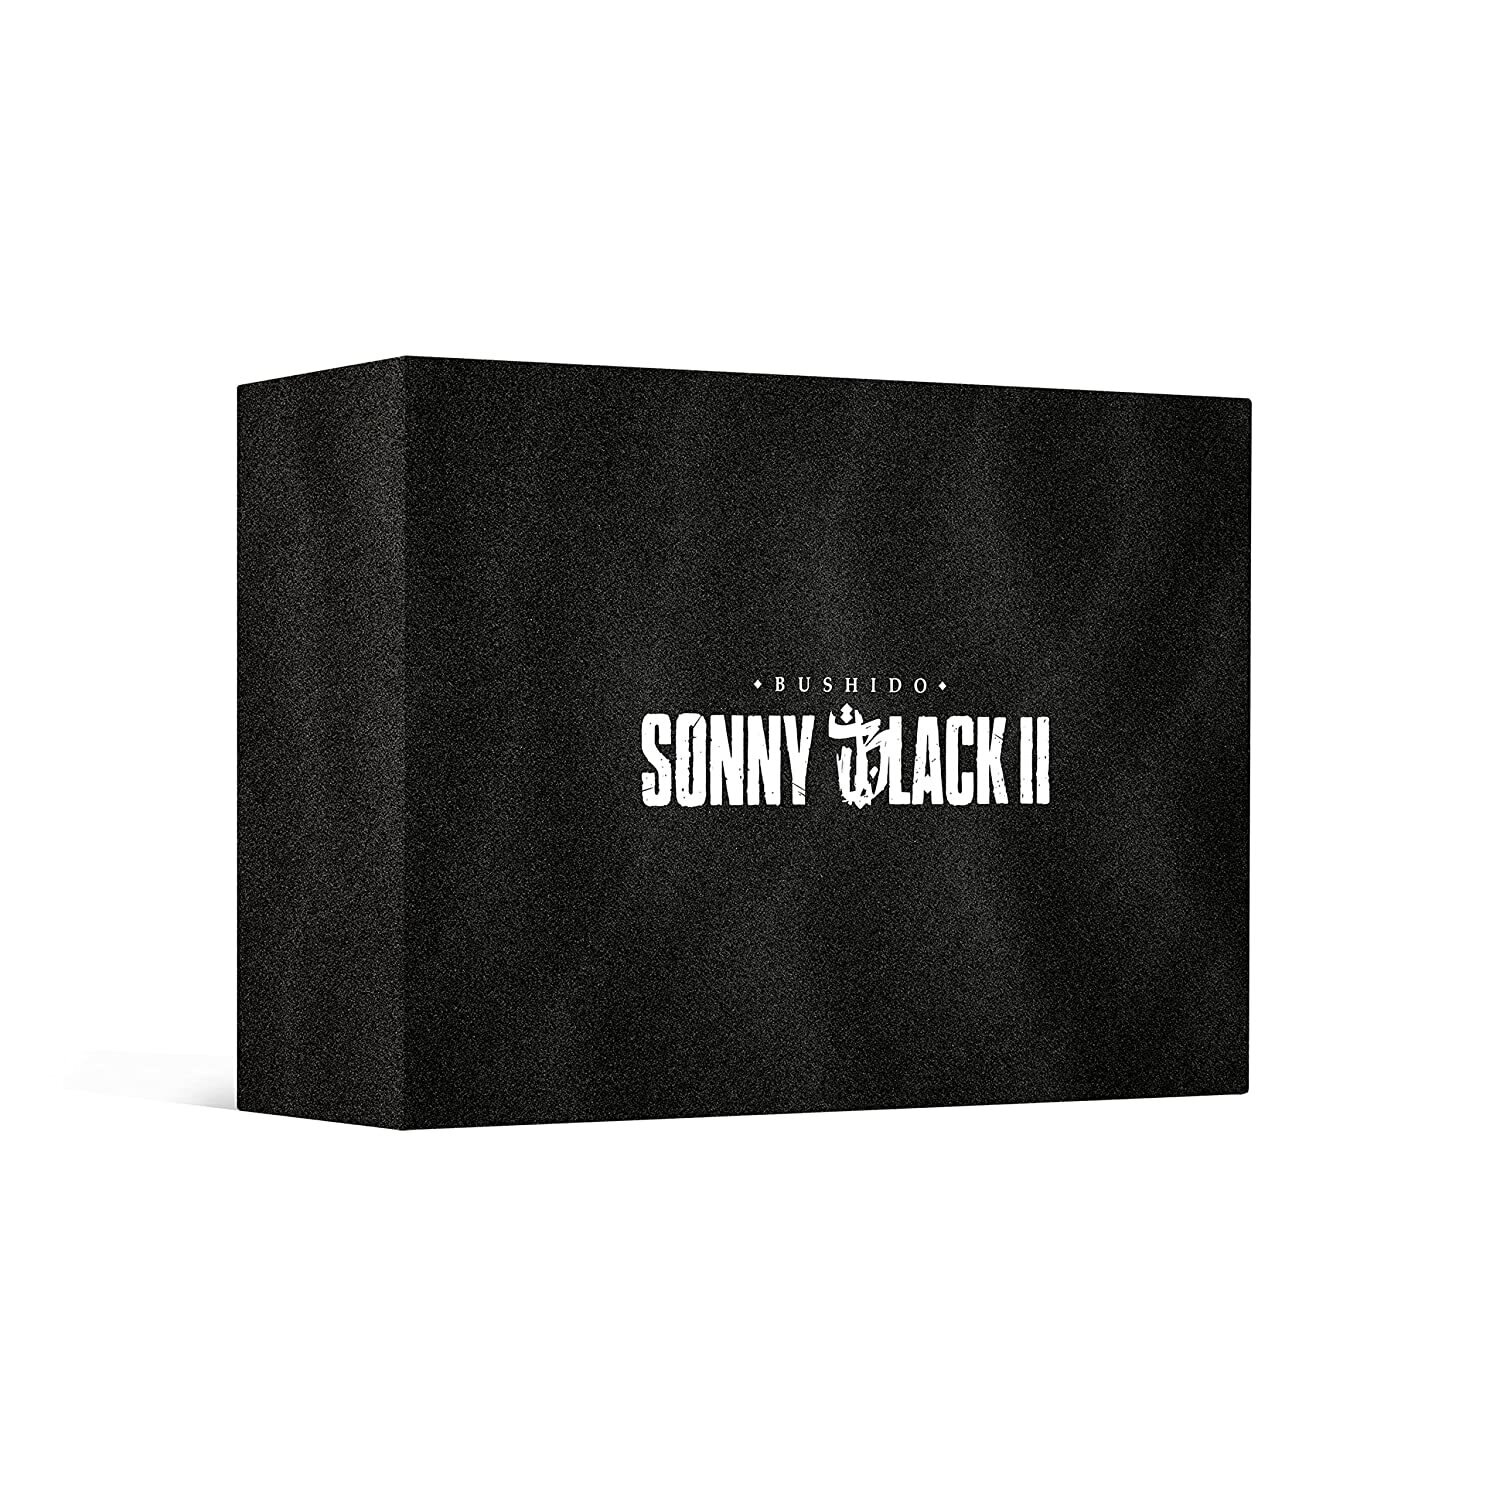 Bushido - Sonny Black 2 (Limited Deluxe Box)(2020) CD